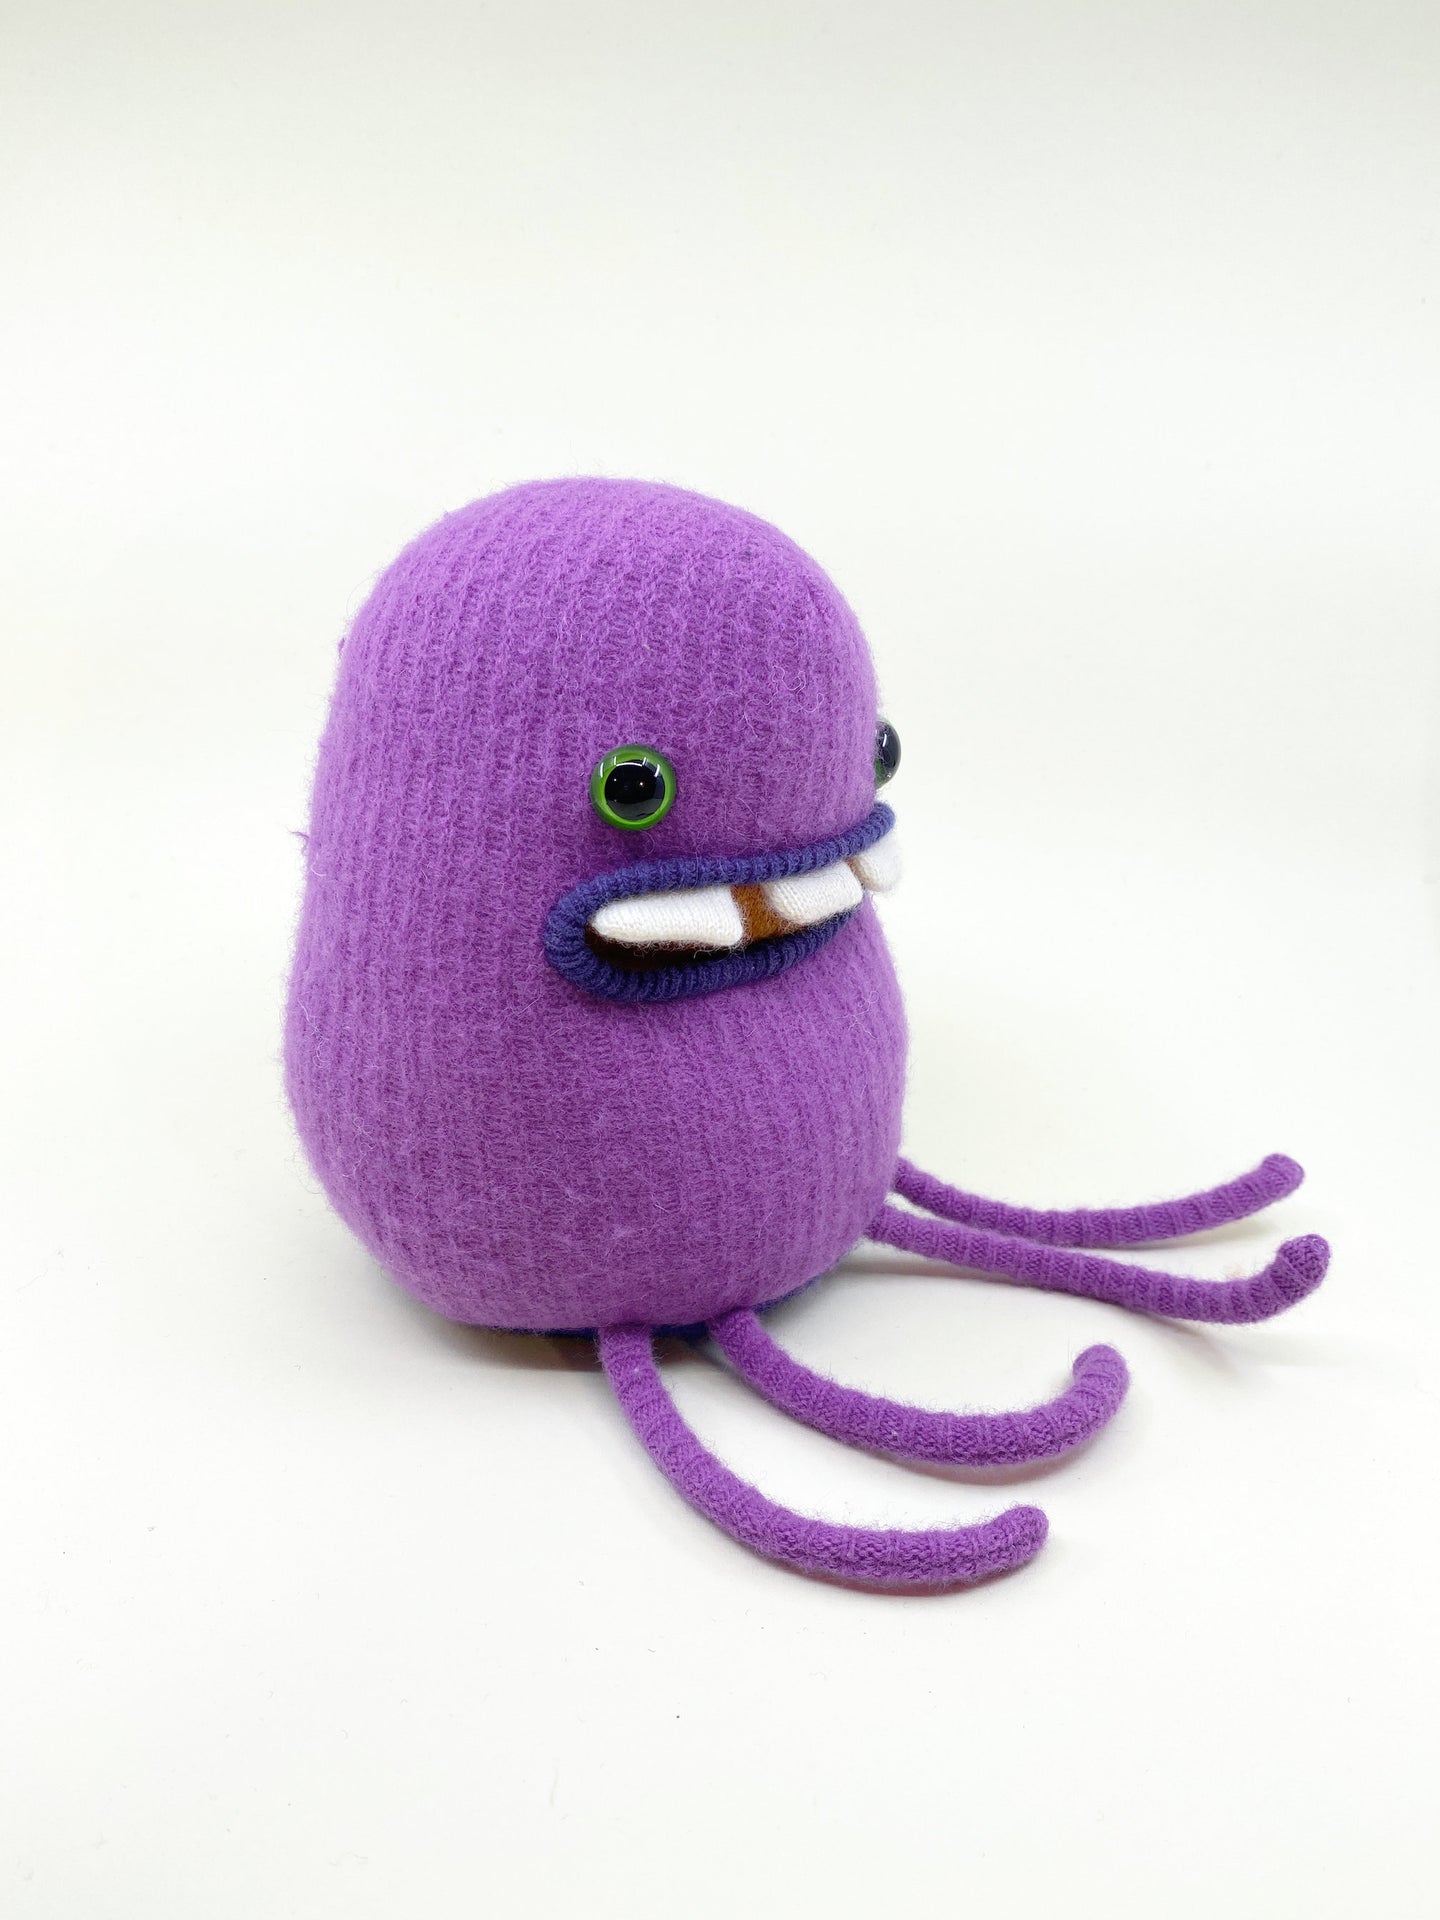 purple stuffed animal with teeth